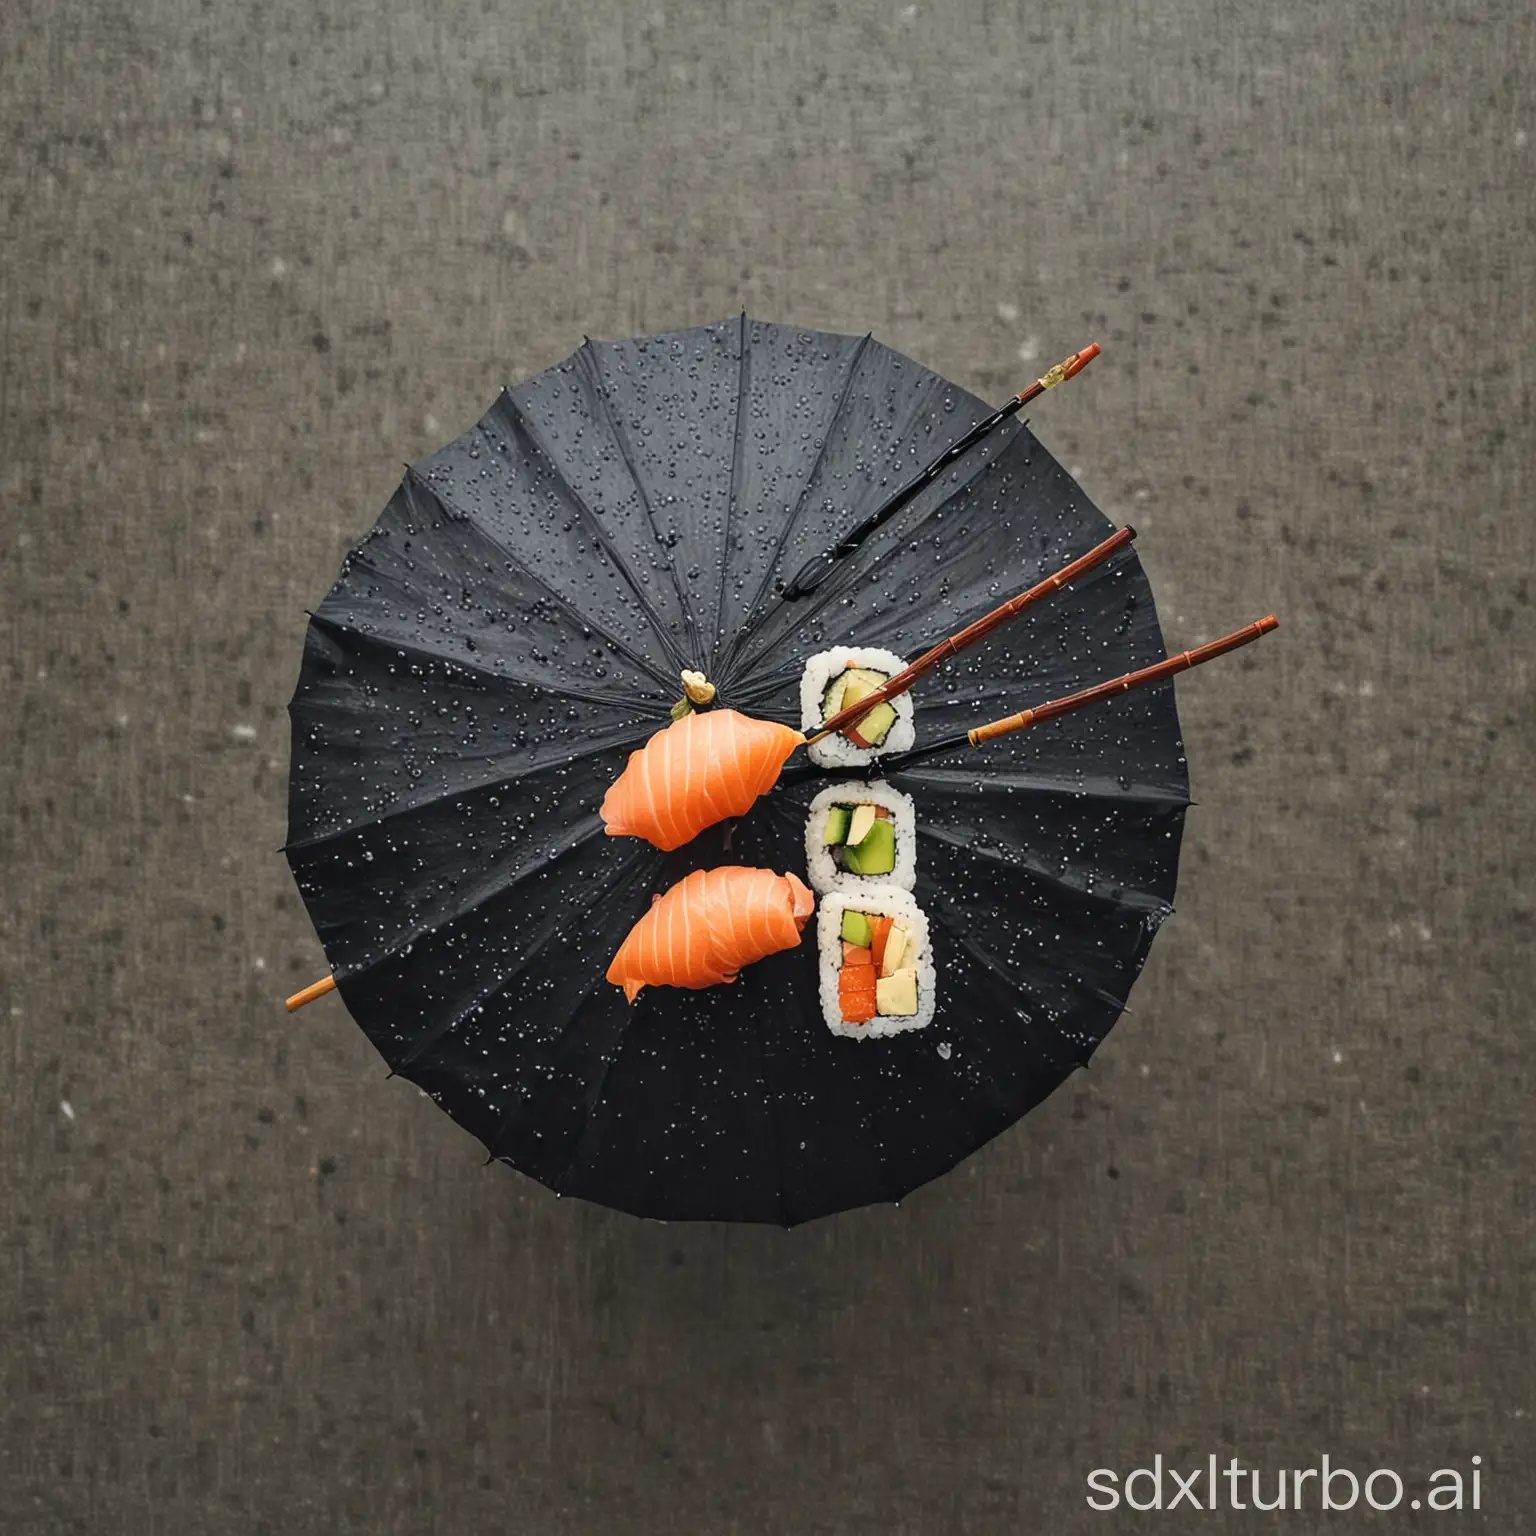 Colorful-Sushi-Arrangement-on-Decorative-Umbrella